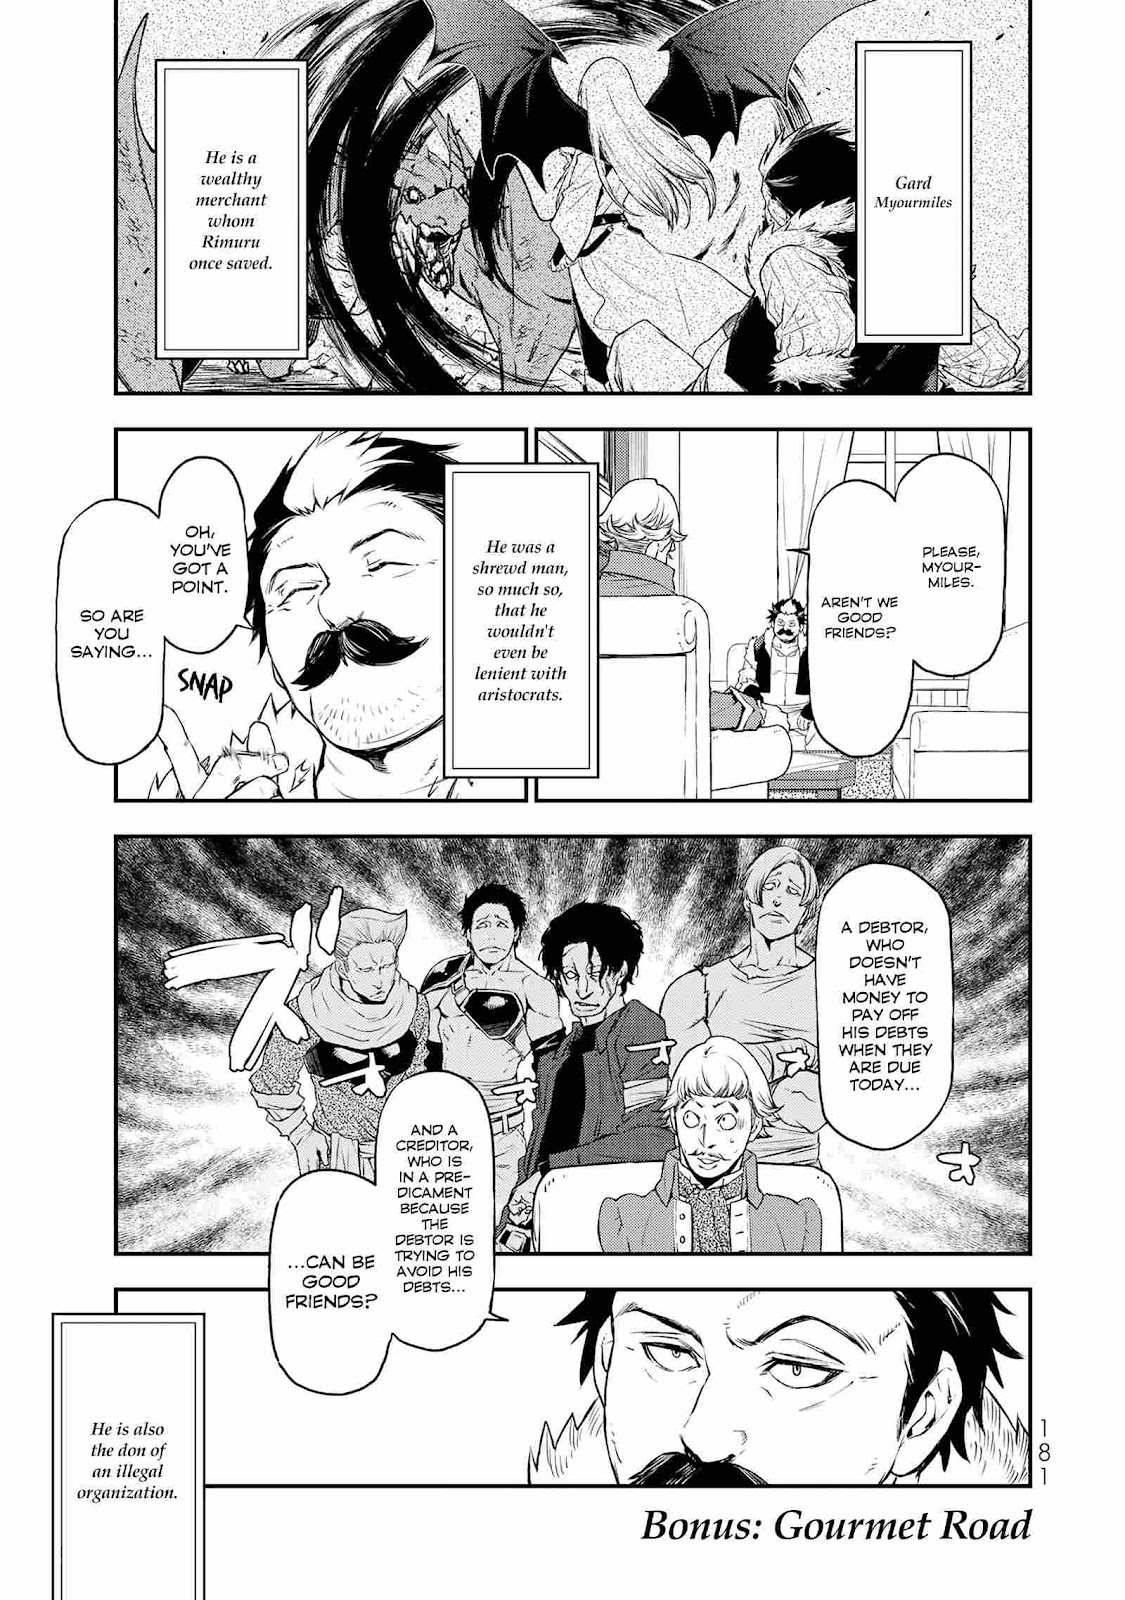 Read Tensei Shitara Slime Datta Ken Chapter 112: A Problem Arises on  Mangakakalot